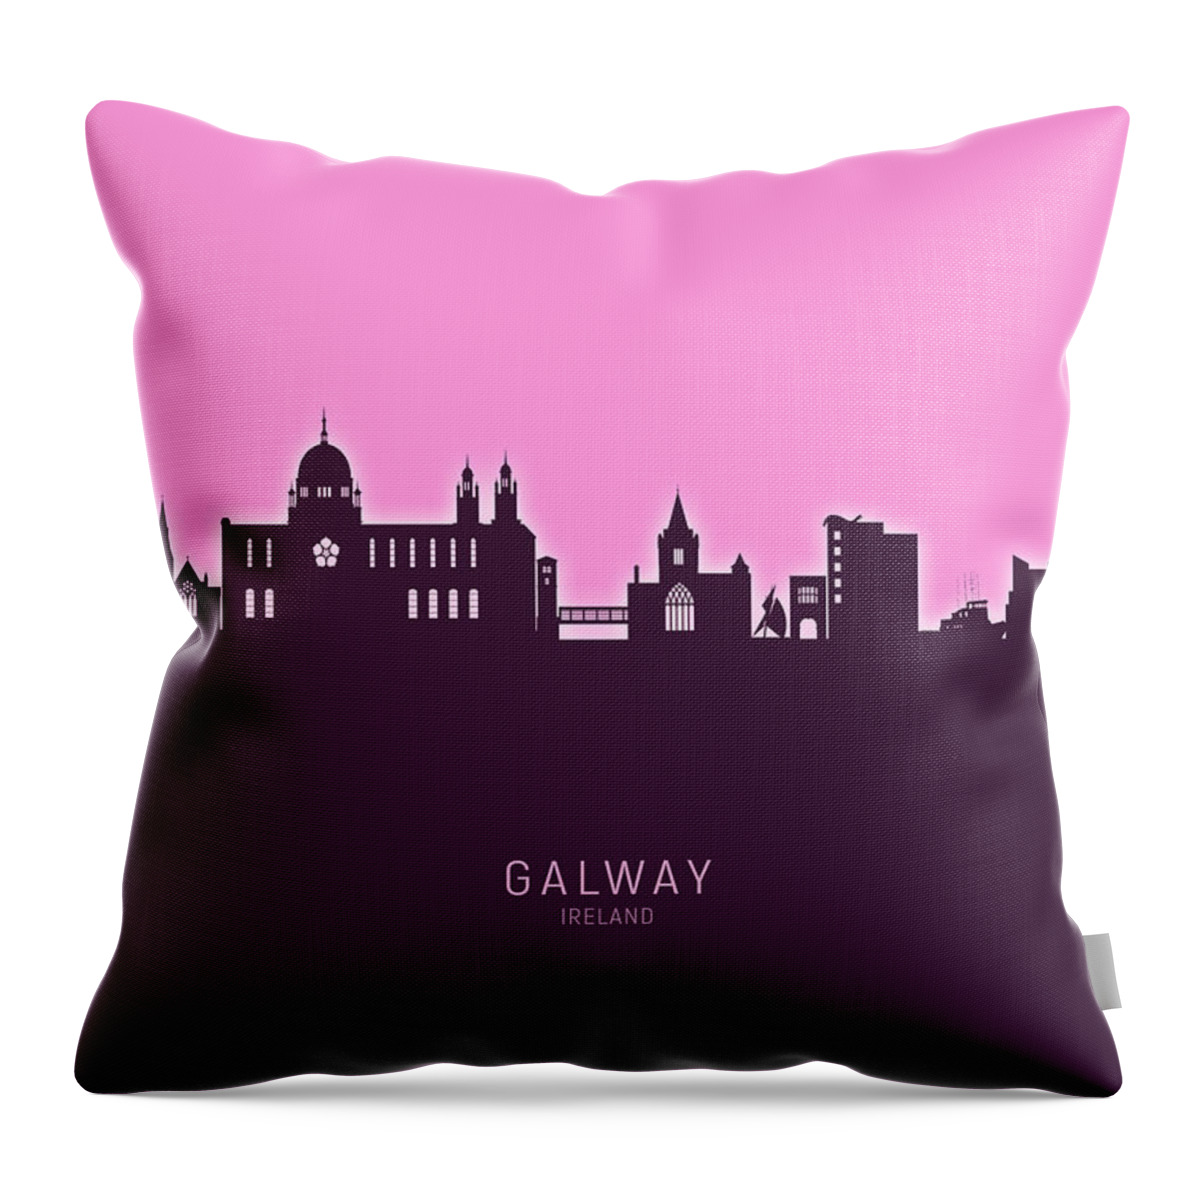 Galway Throw Pillow featuring the digital art Galway Ireland Skyline #30 by Michael Tompsett